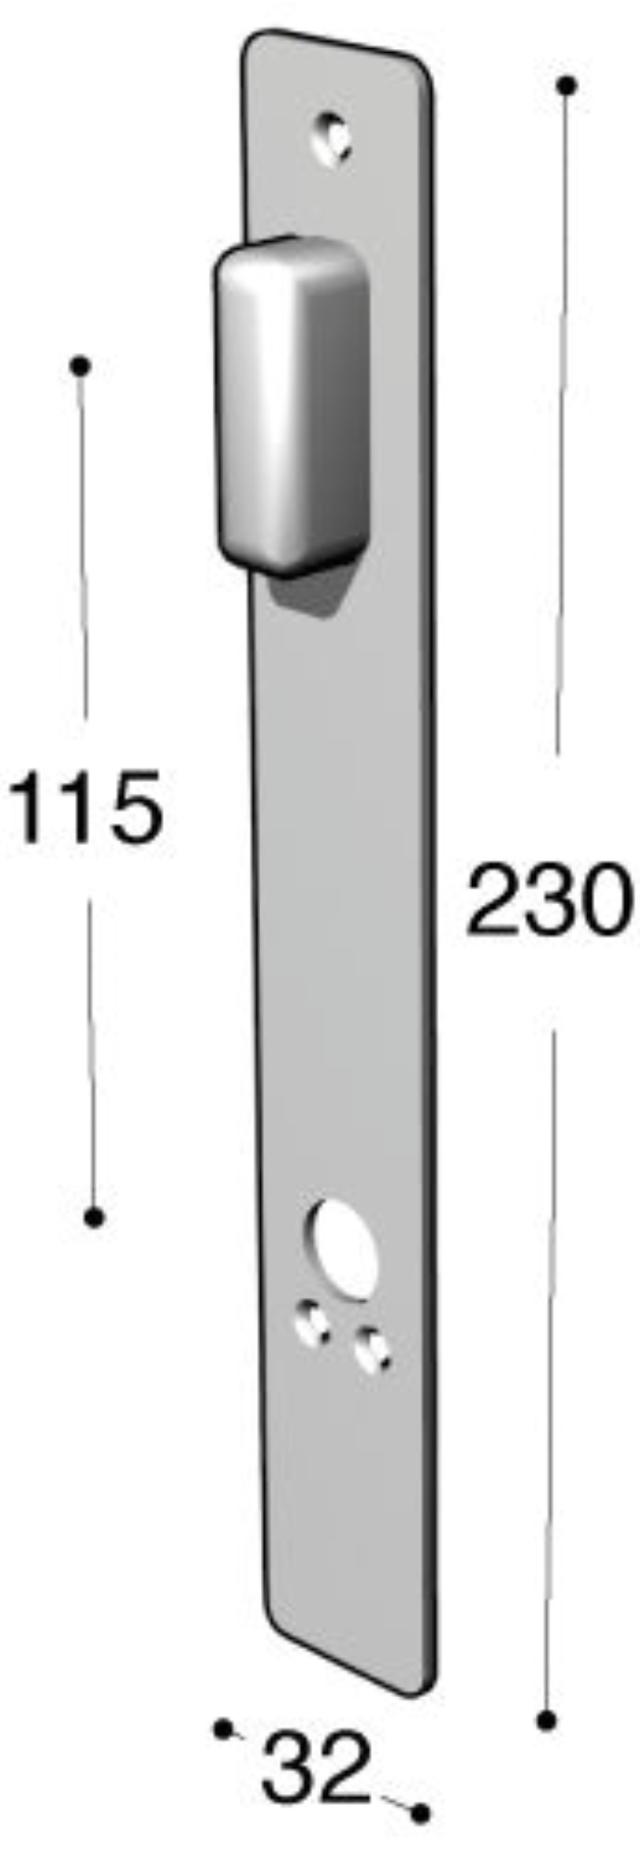 Ruko-Line Narrow profile long sign inside, door handle at the bottom turns